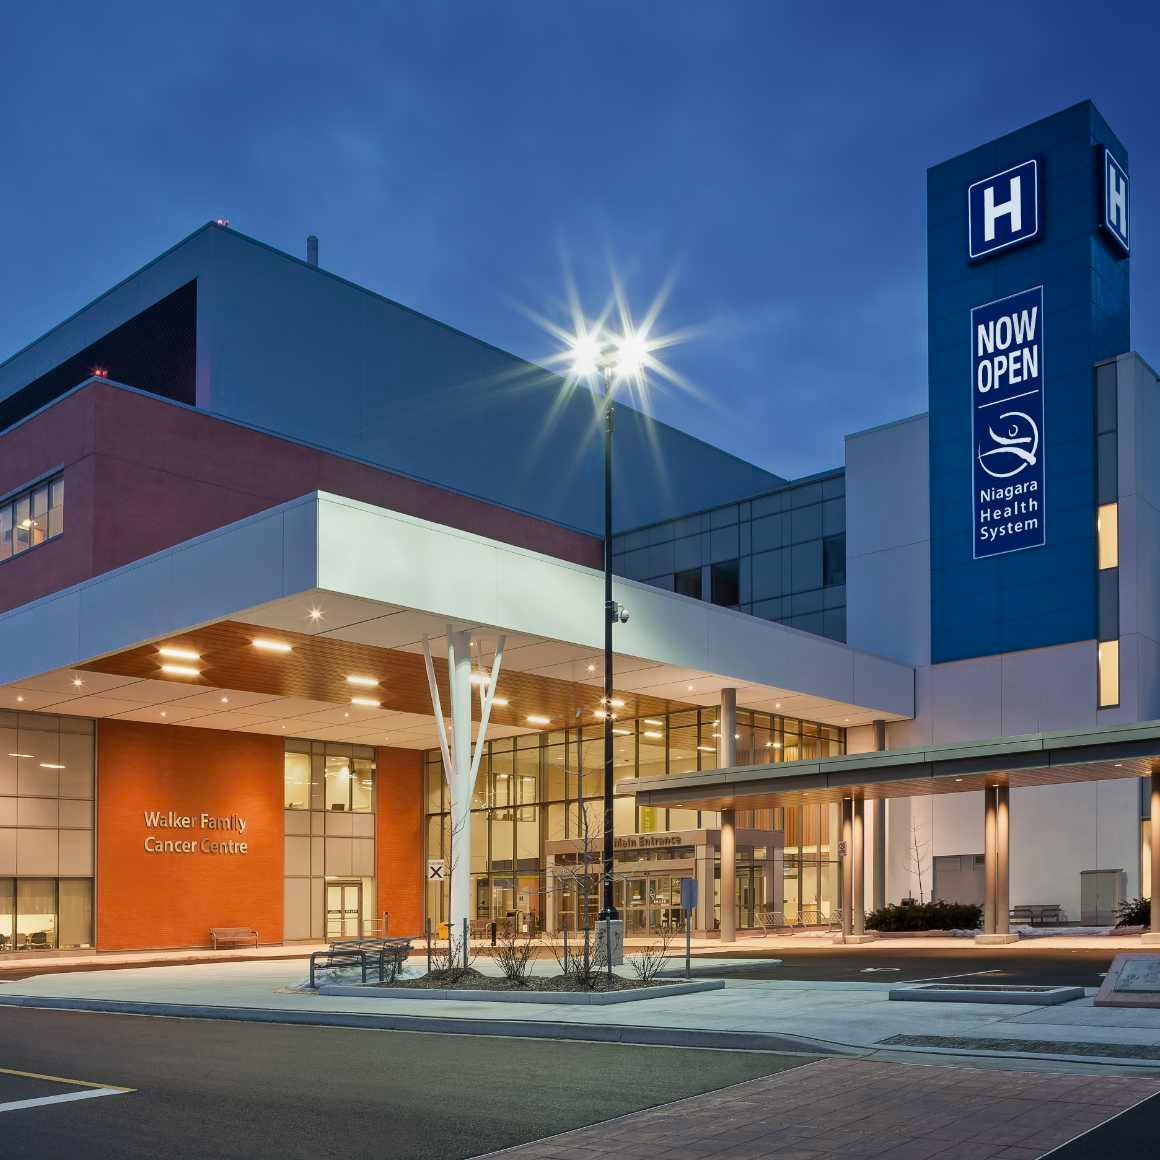 Doors open on Niagara’s new St. Catharines hospital image